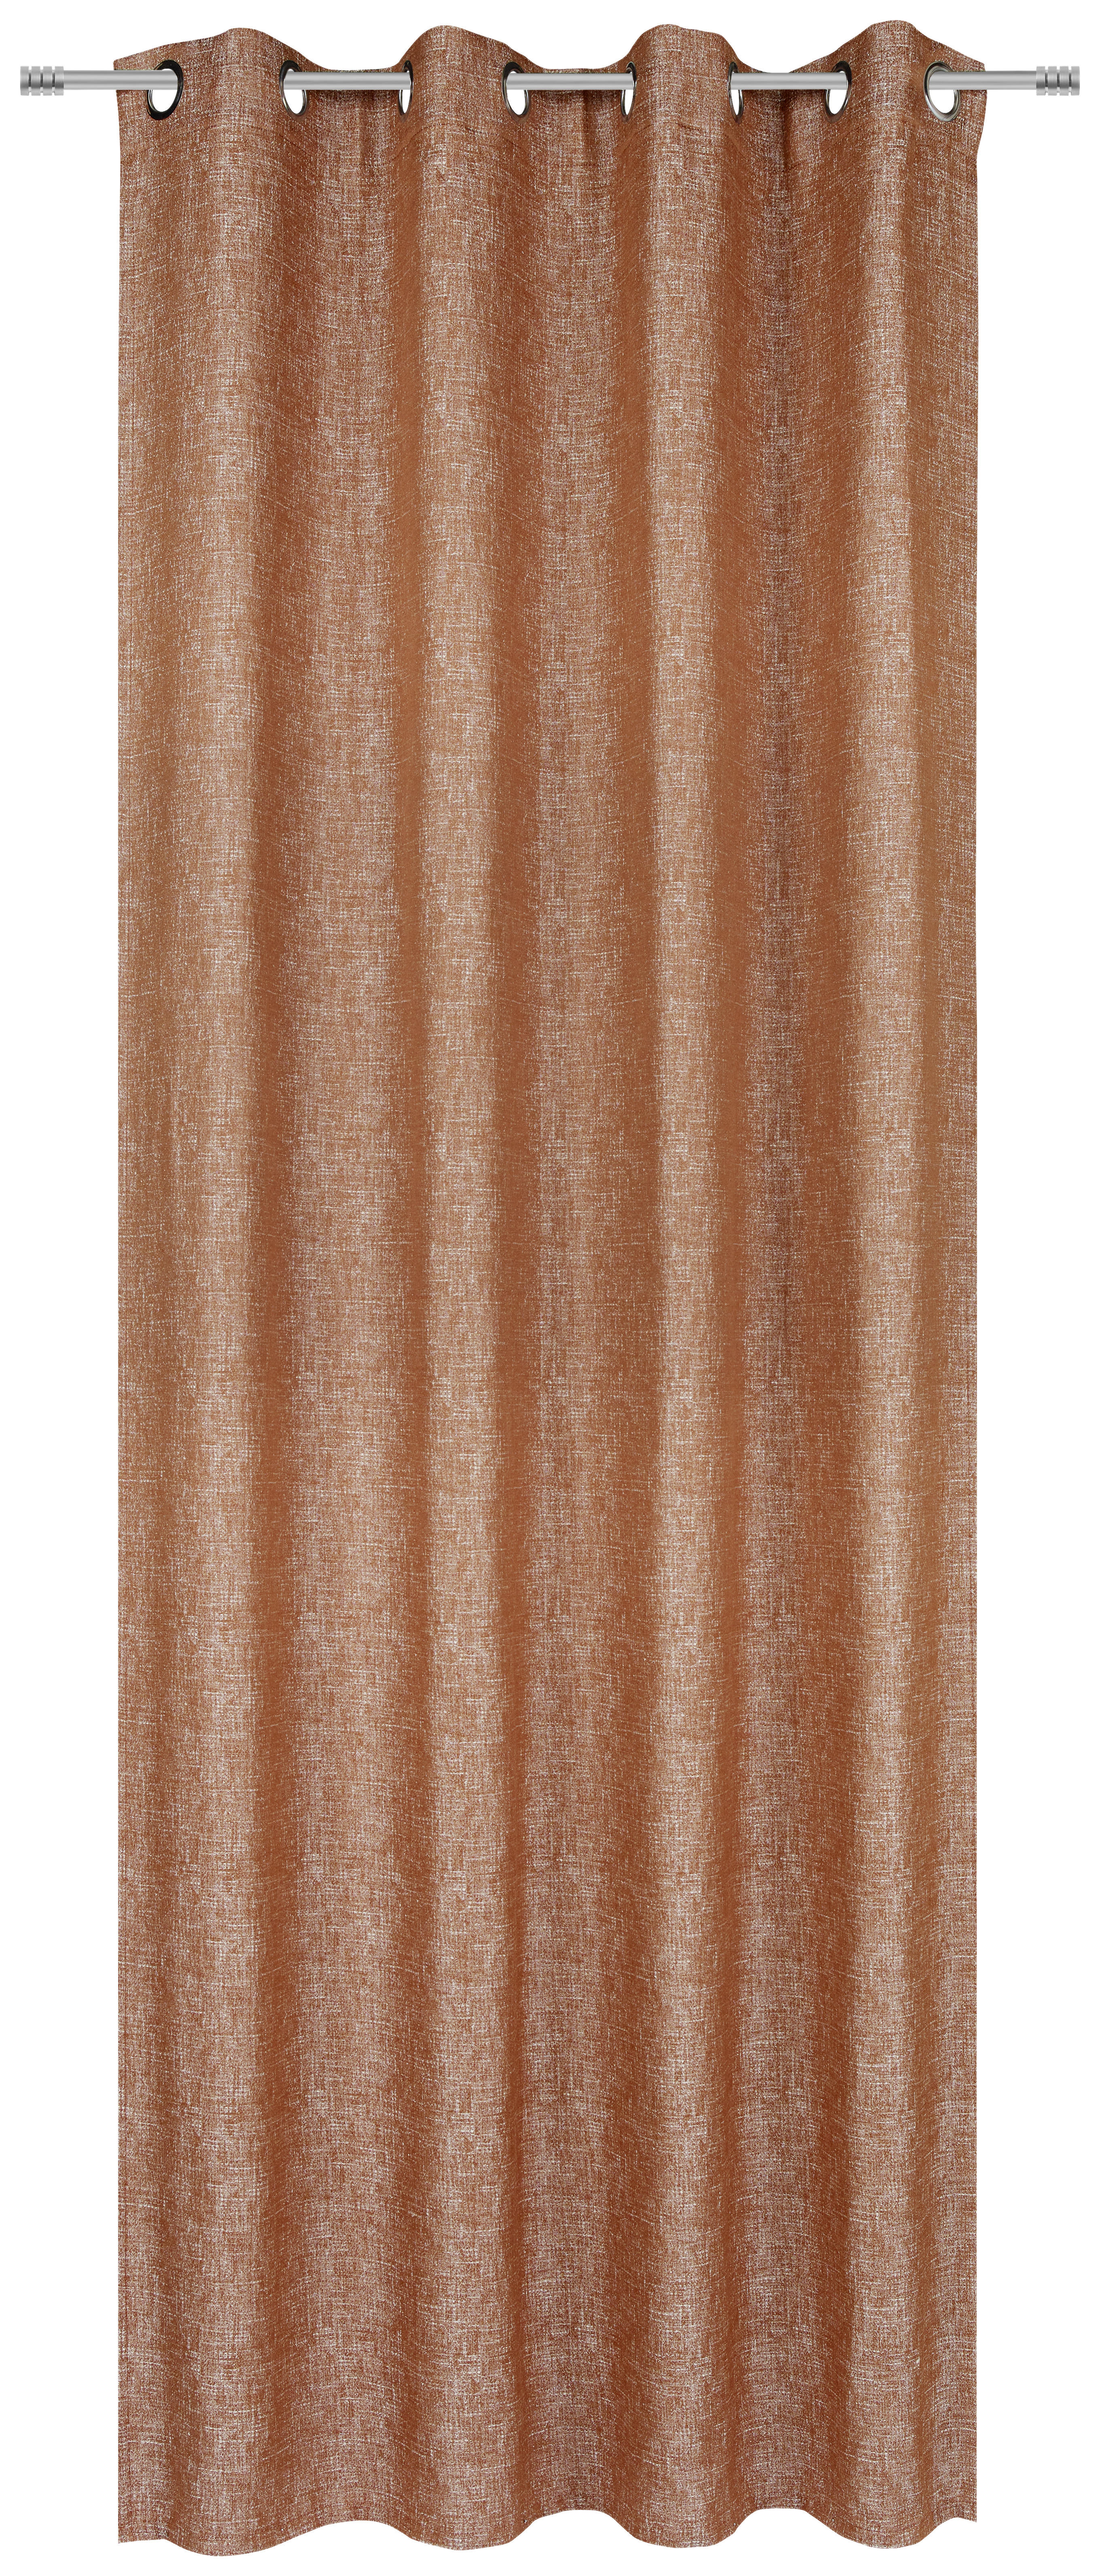 ÖSENSCHAL blickdicht 135/250 cm   - Terra cotta, Design, Textil (135/250cm) - Ambiente